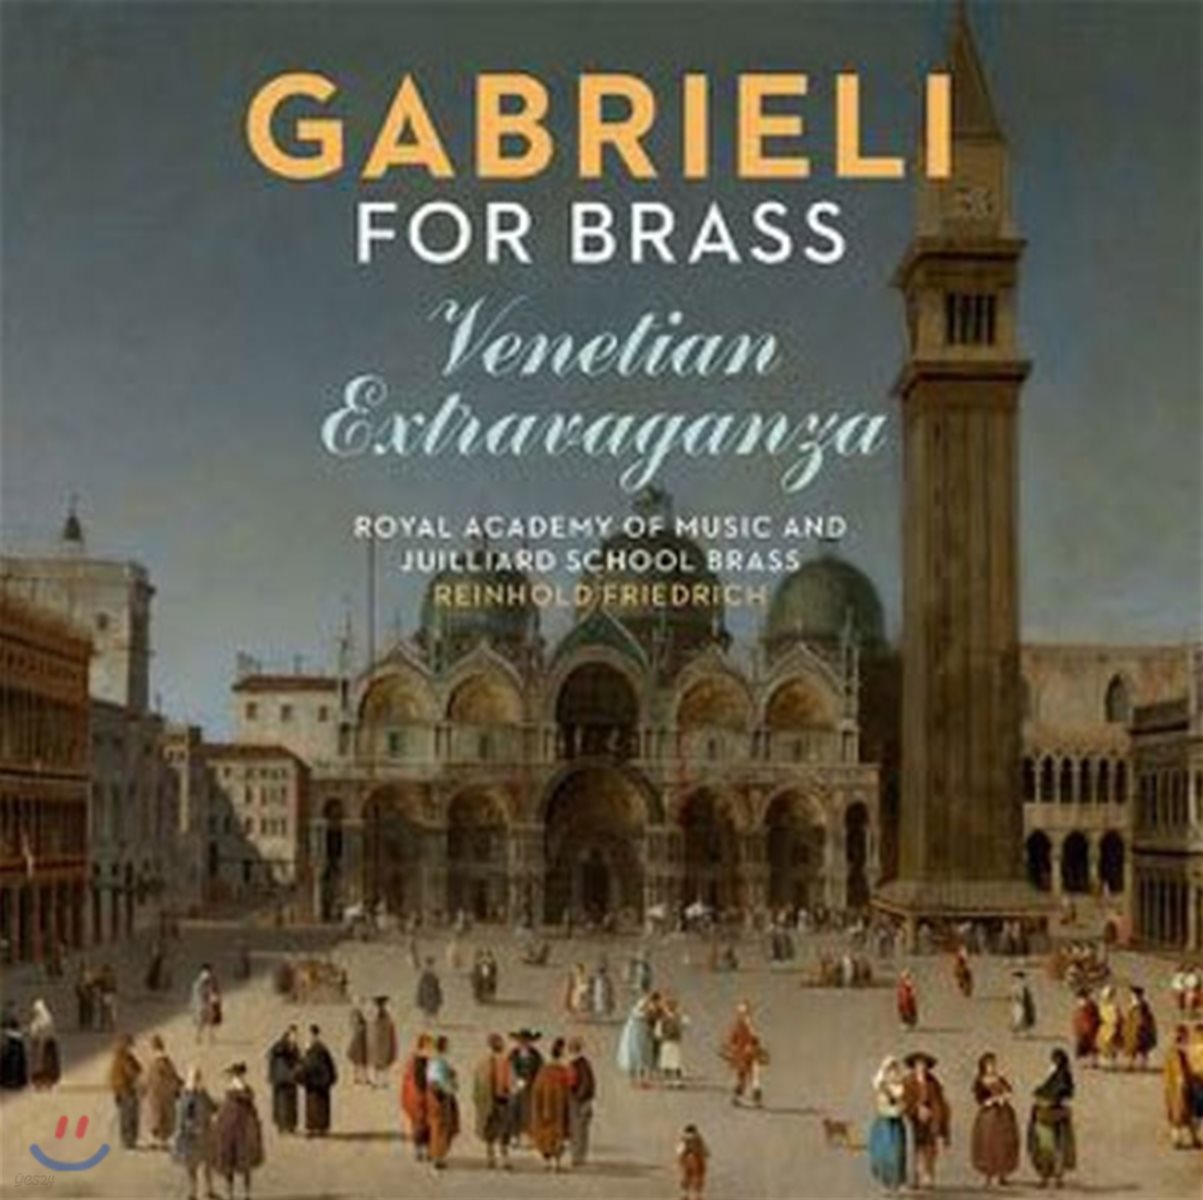 Royal Academy of Music 가브리엘리: 브라스를 위한 음악 (Gabrieli For Brass: Venetian Extravaganza)